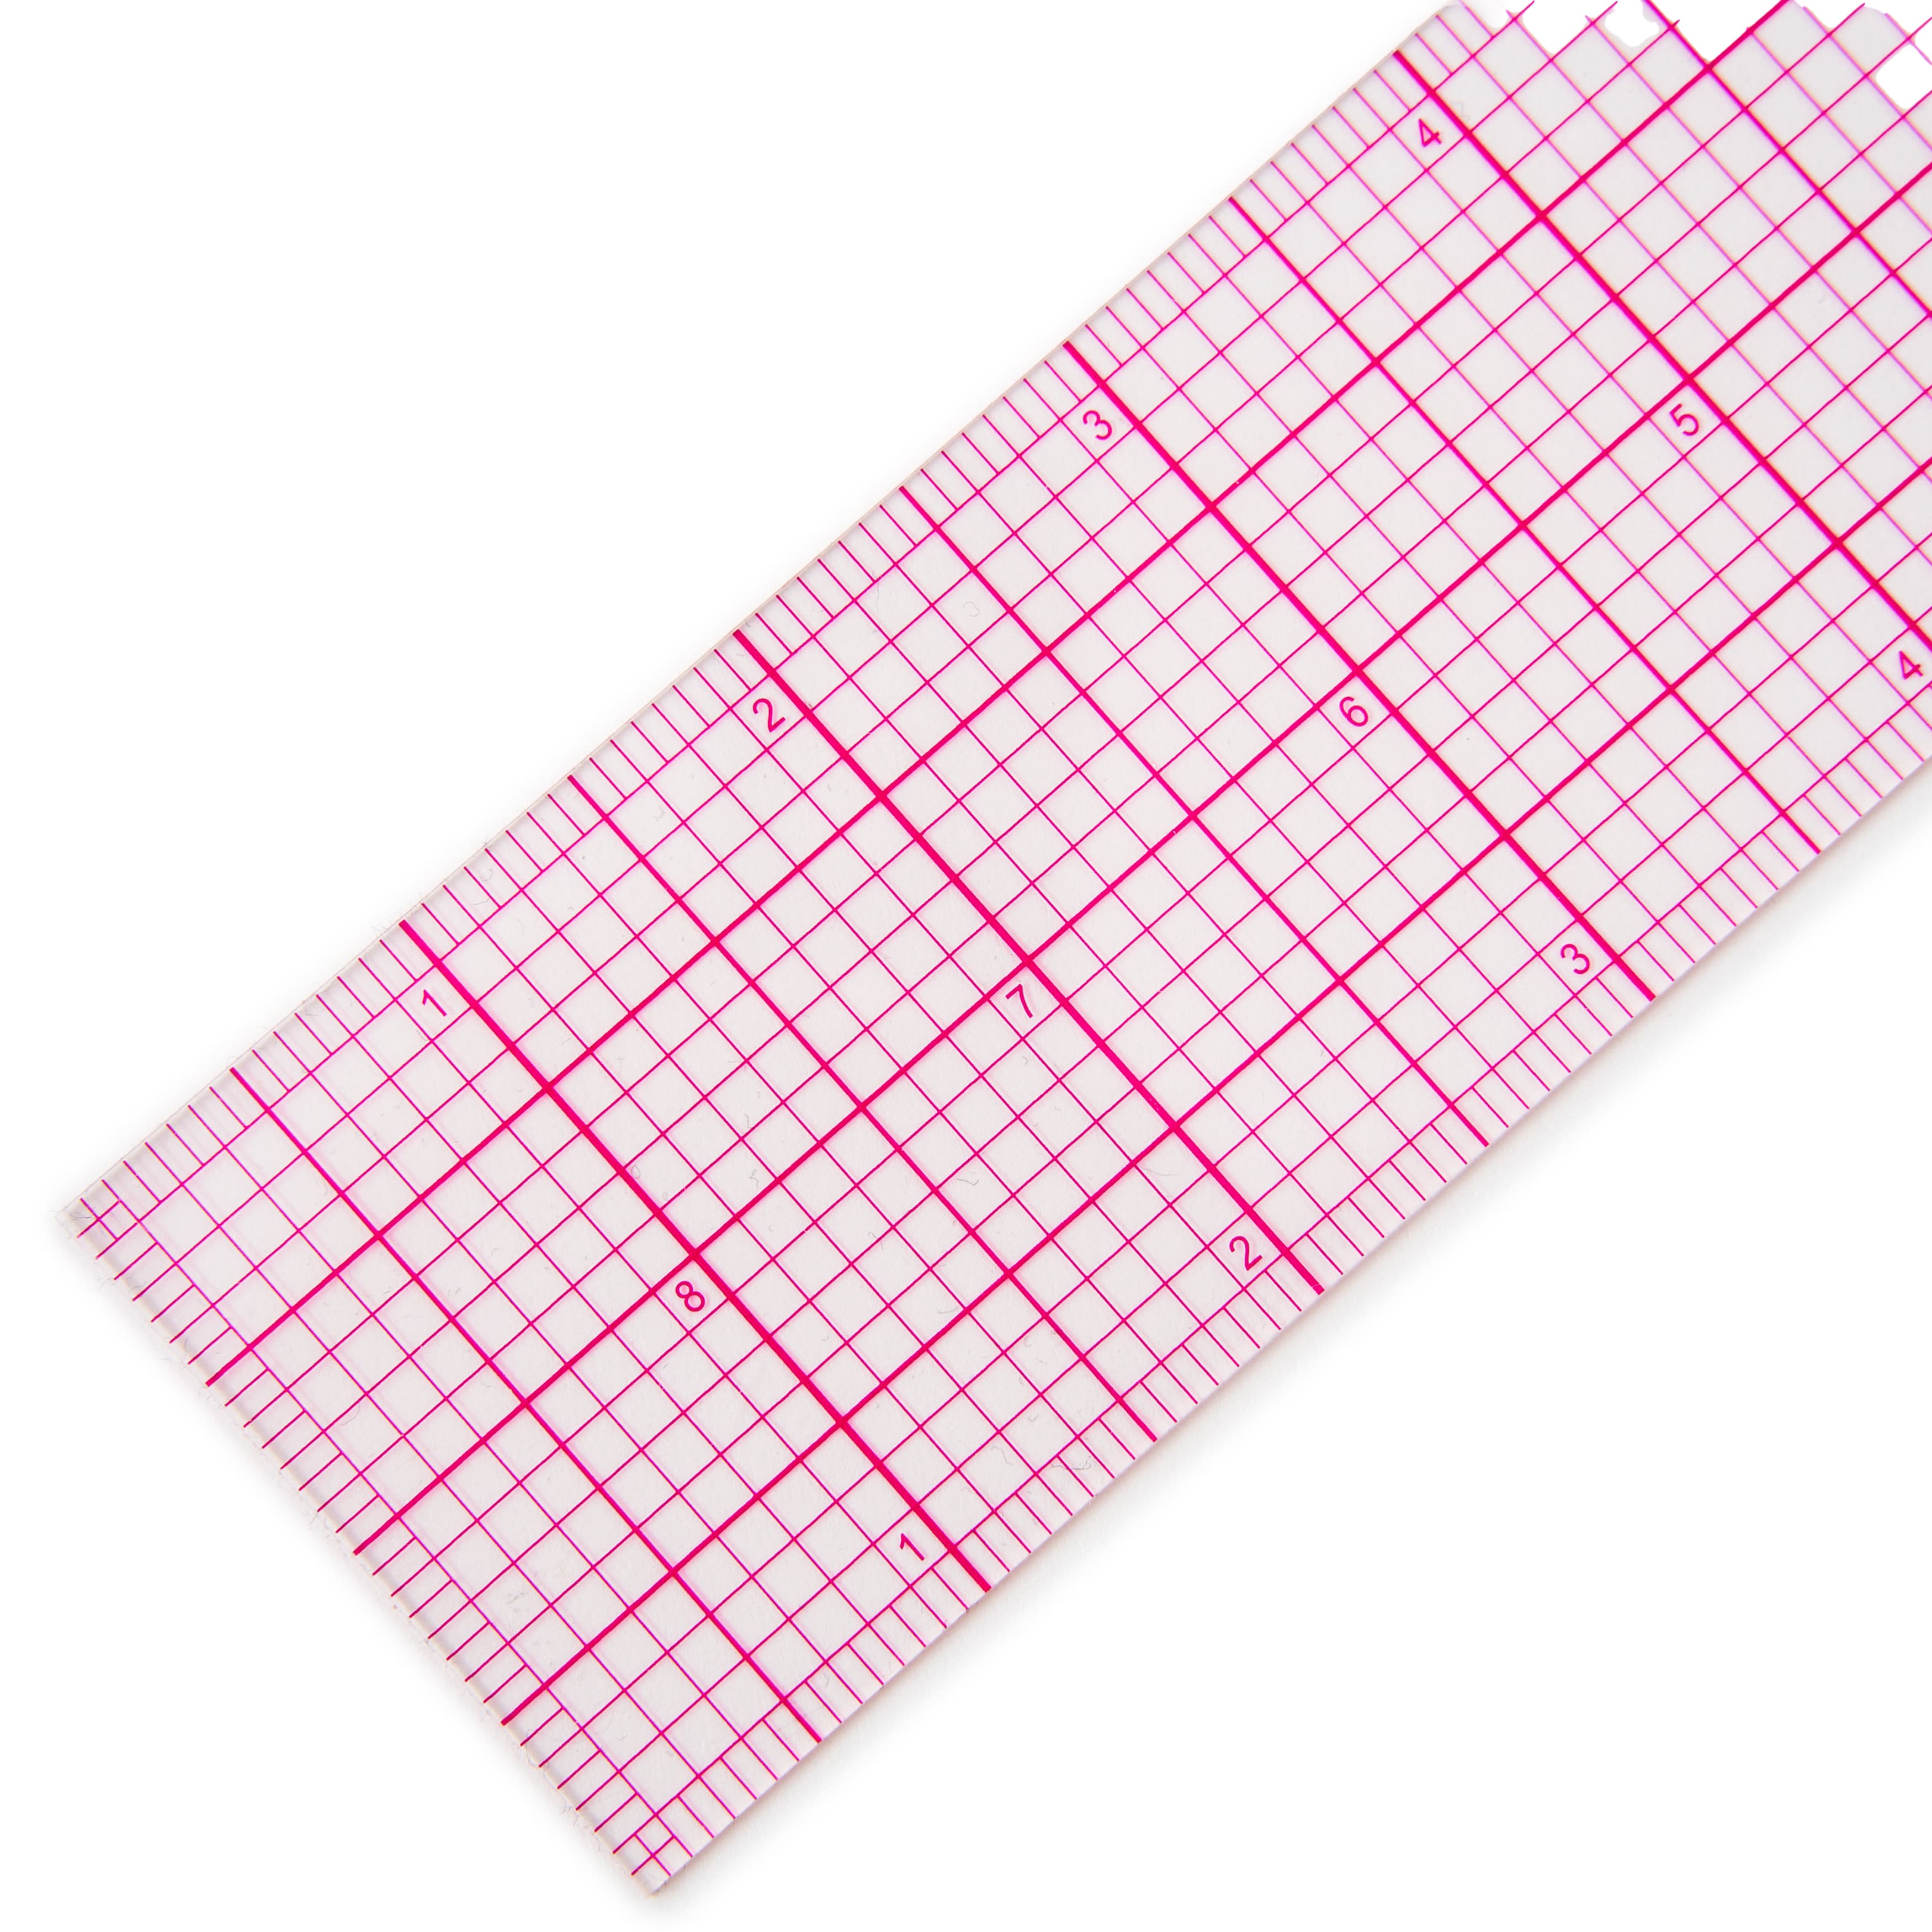 Westcott Clear Plastic Grid Rulers